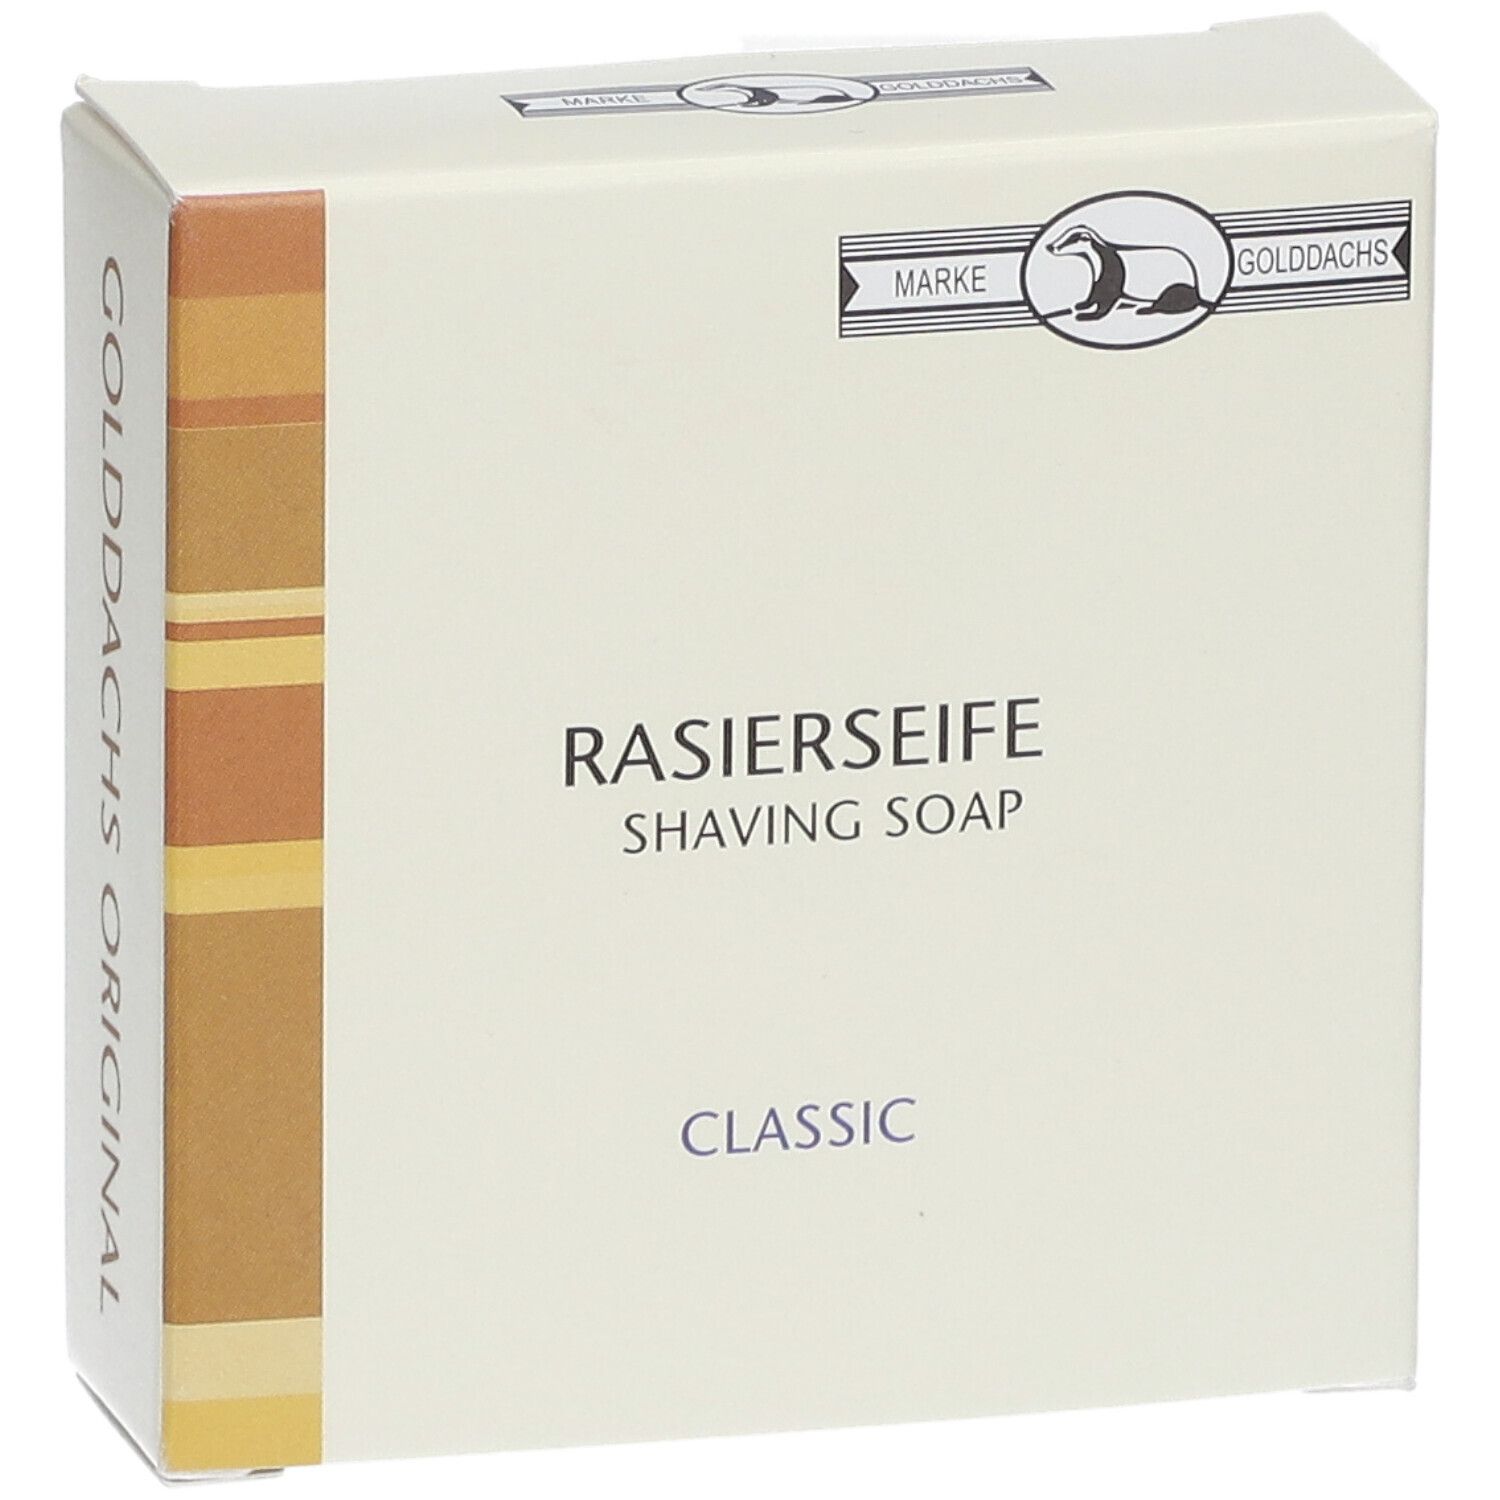 Rasierseife - Classic St GOLDDACHS 1 APOTHEKE SHOP